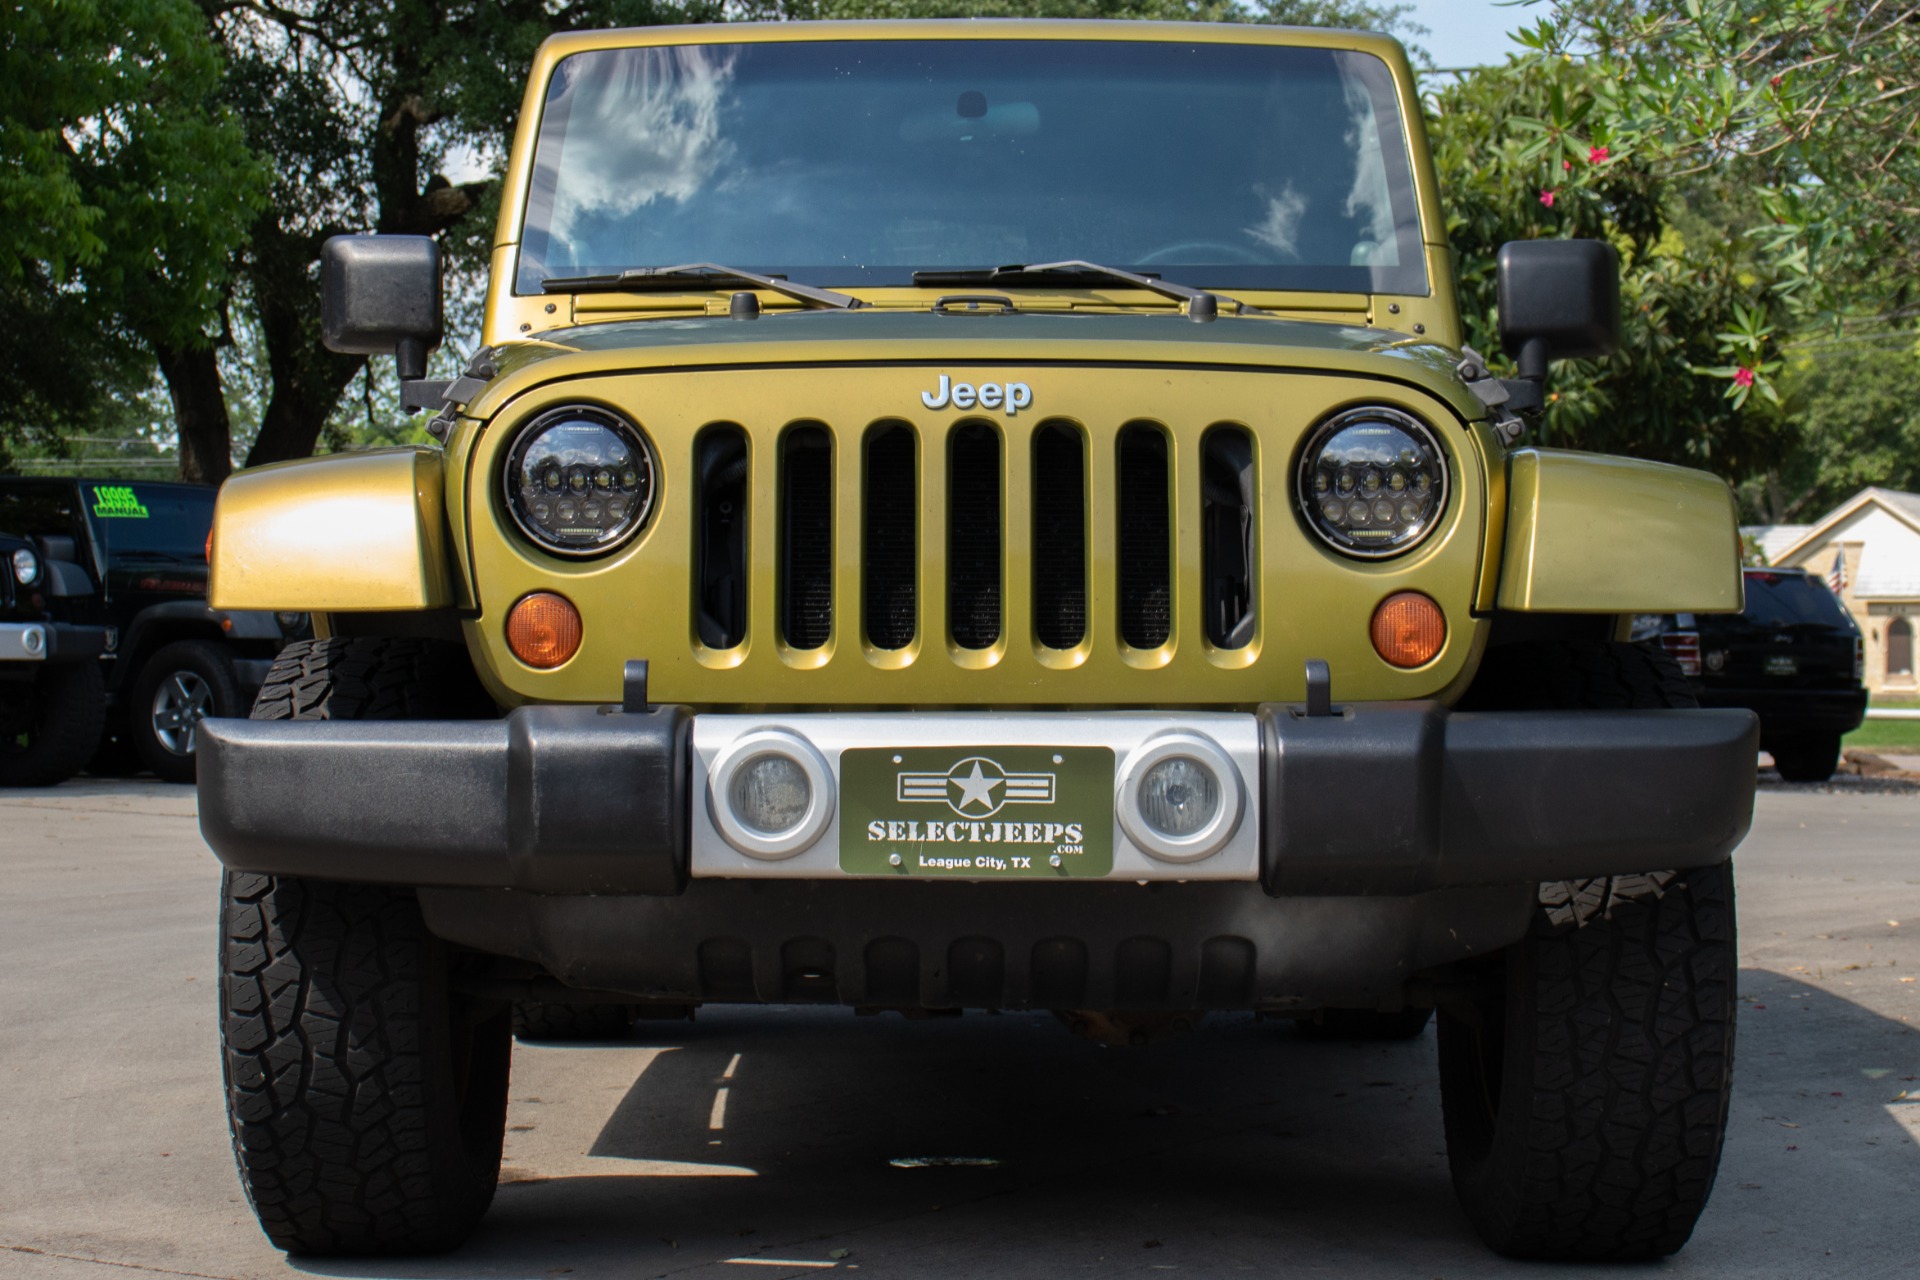 Used 2008 Jeep Wrangler Sahara For Sale ($12,995) | Select Jeeps Inc 2008 Jeep Wrangler Sahara Unlimited Towing Capacity